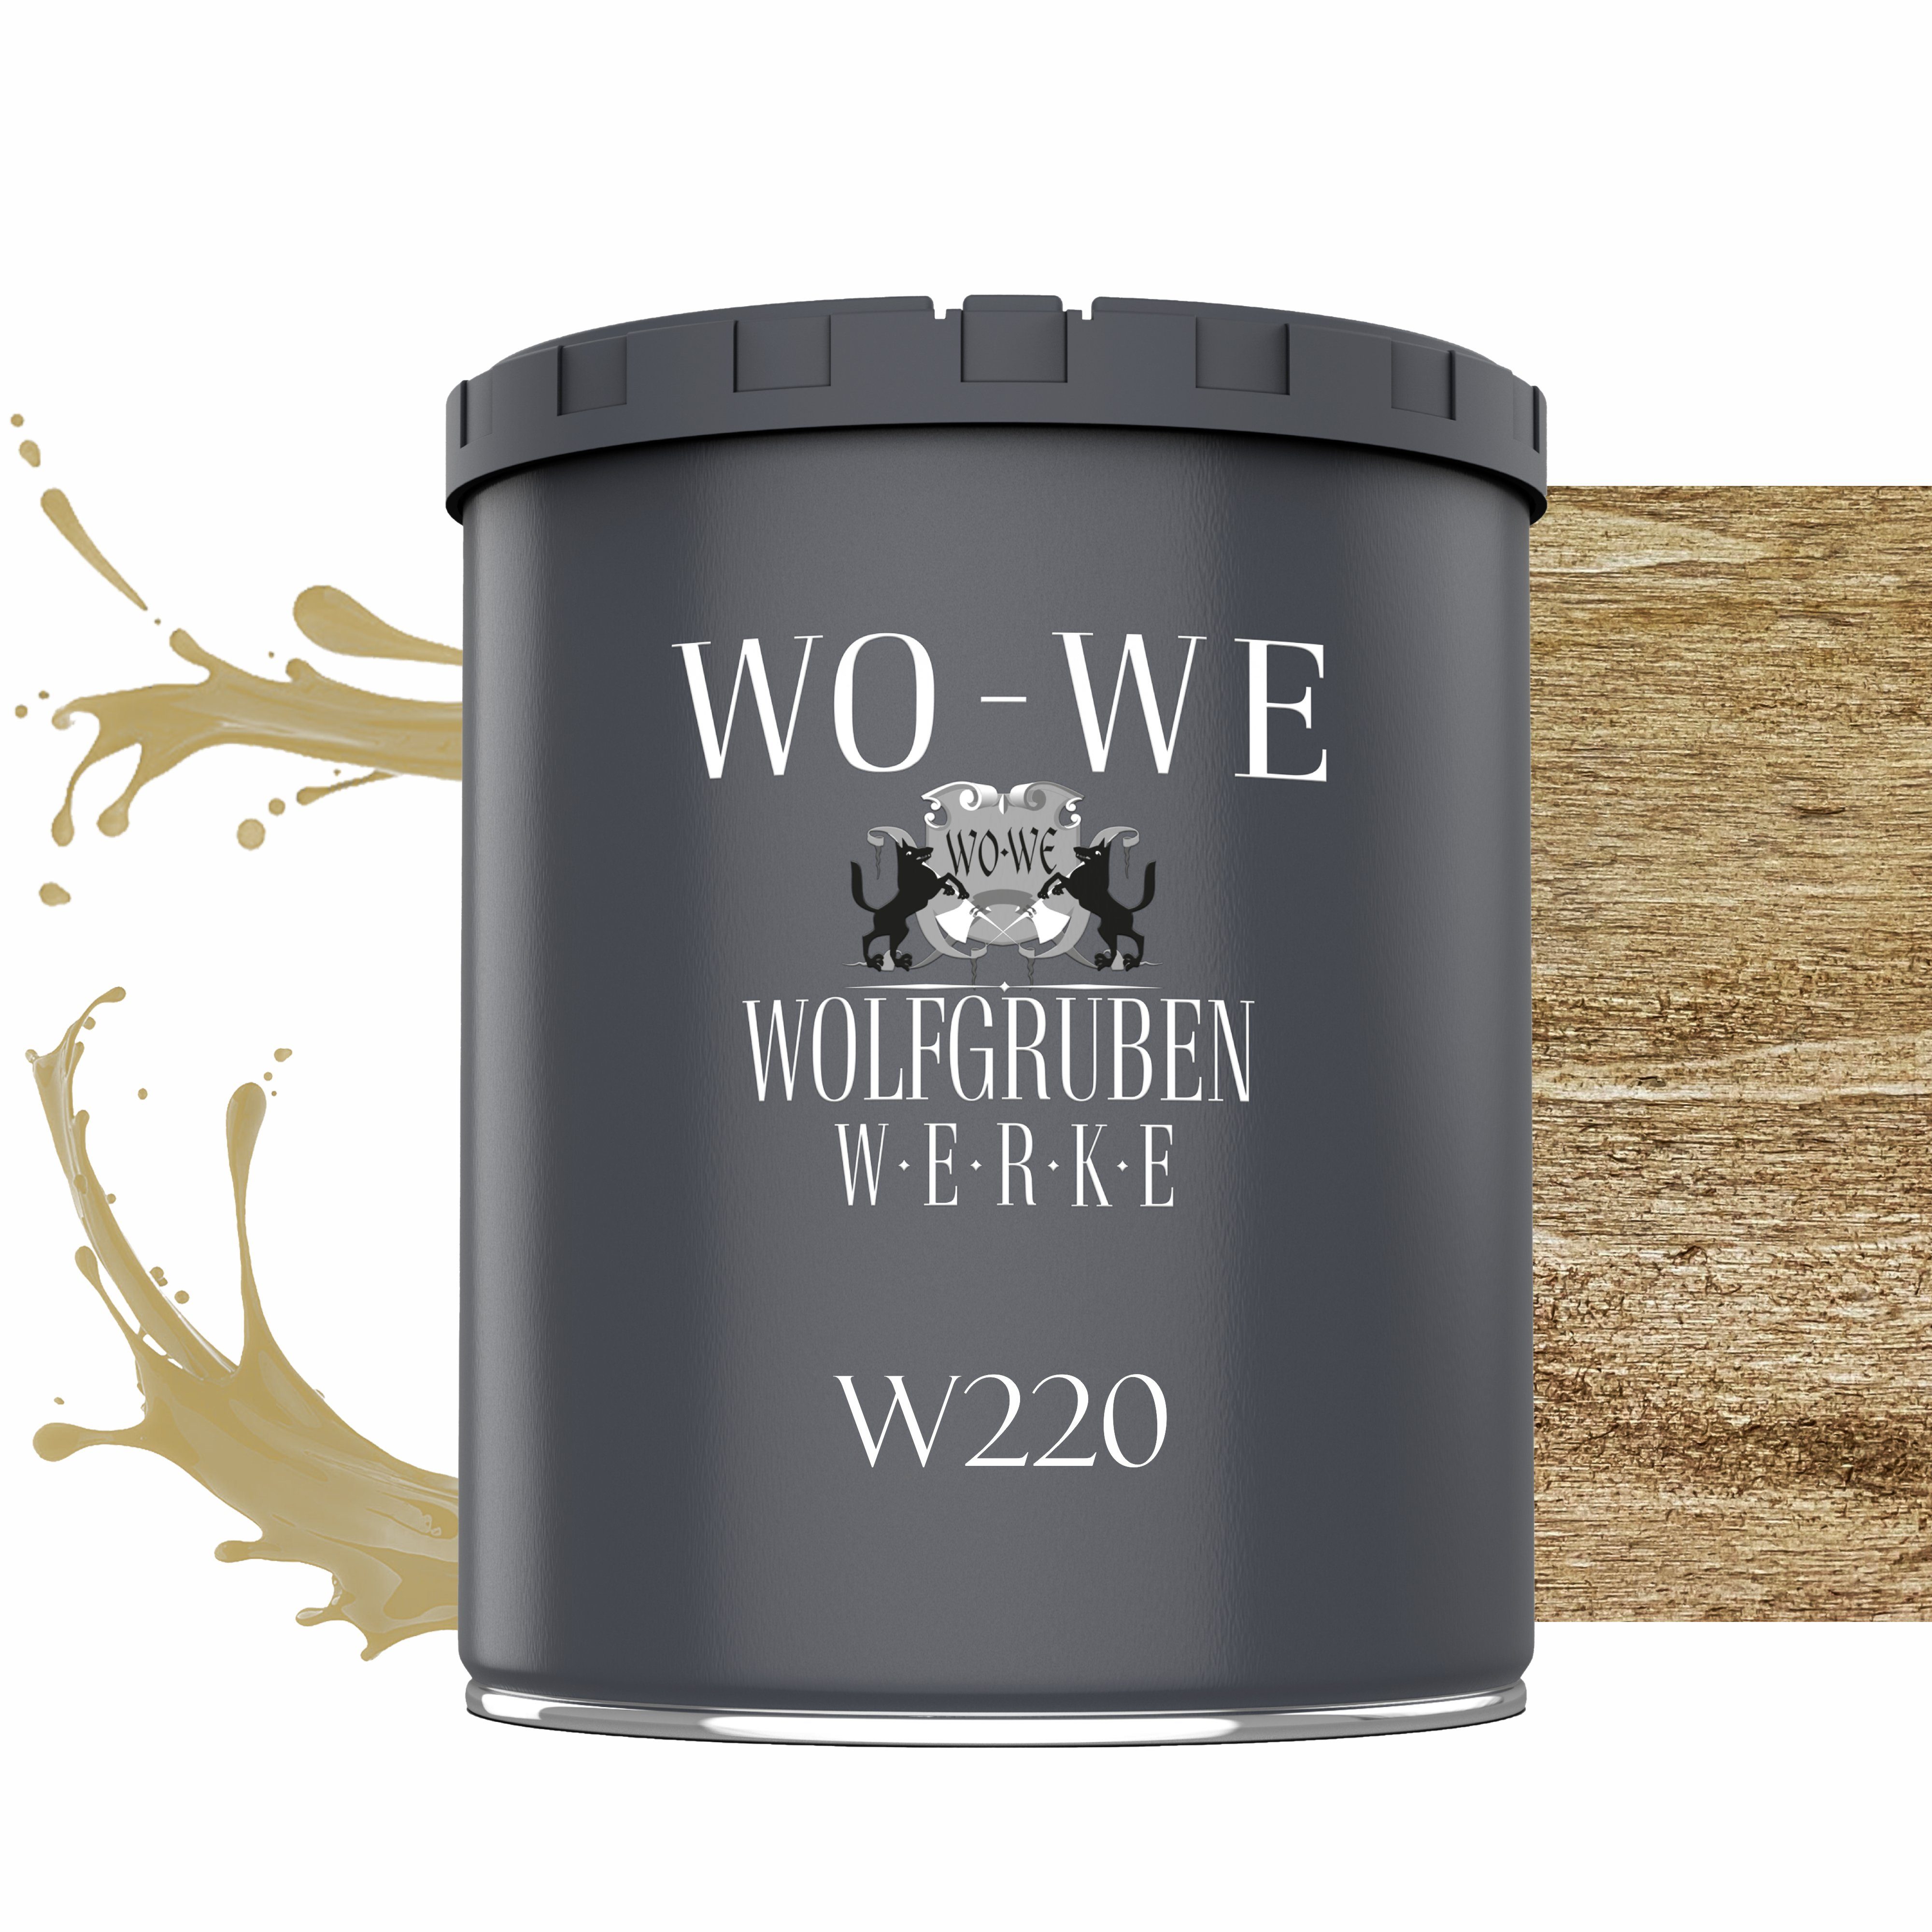 W220, Hell 1-2,5L, UV-stabil 2in1 Holzschutzlasur Eiche Dickschichtlasur Lösemittelfrei, Holzlasur WO-WE